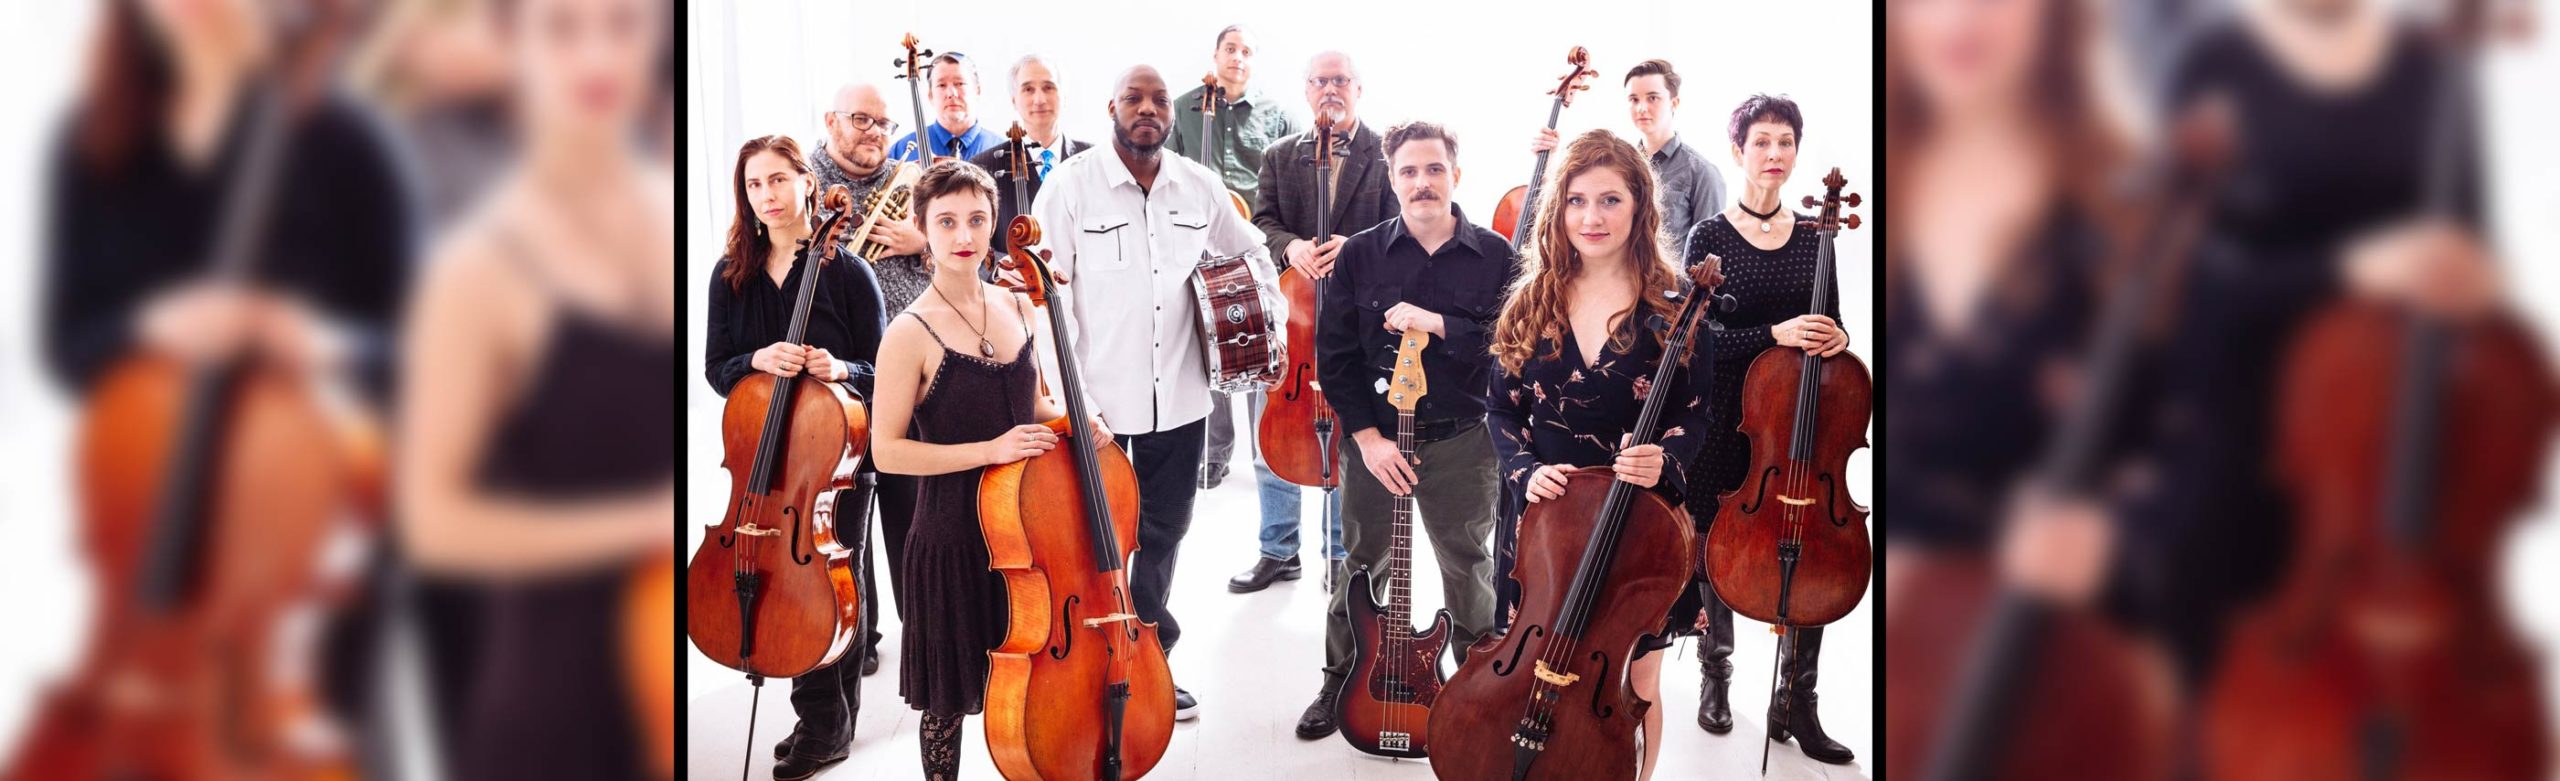 Portland Cello Project Confirms Missoula Concert for 2022 Image